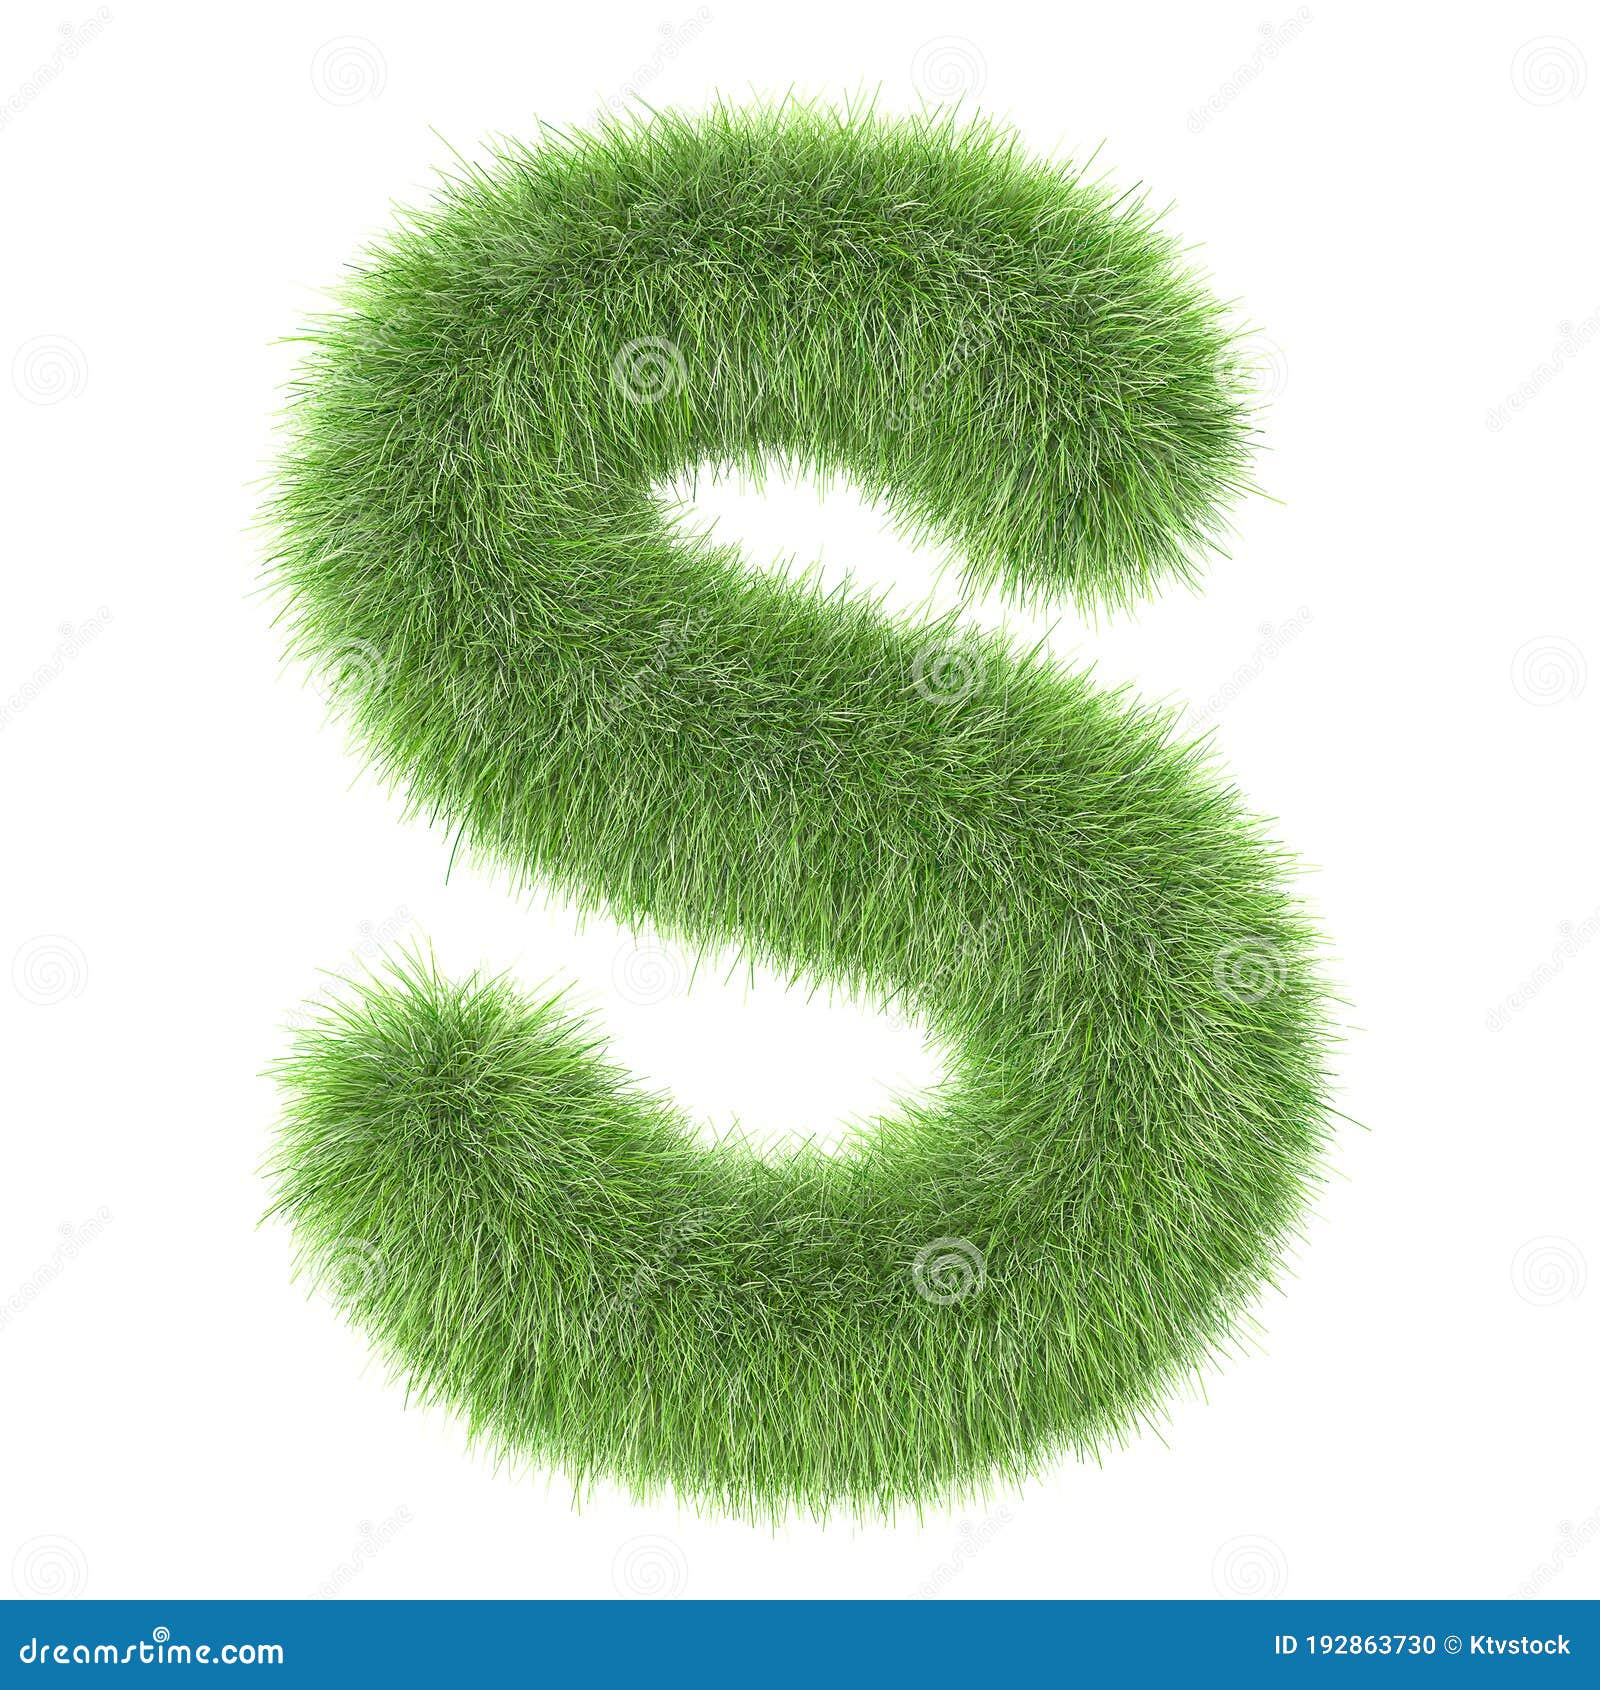 3d Grass Creative Cartoon Nature Decorative Letter S Stock Illustration -  Illustration of abstract, design: 192863730